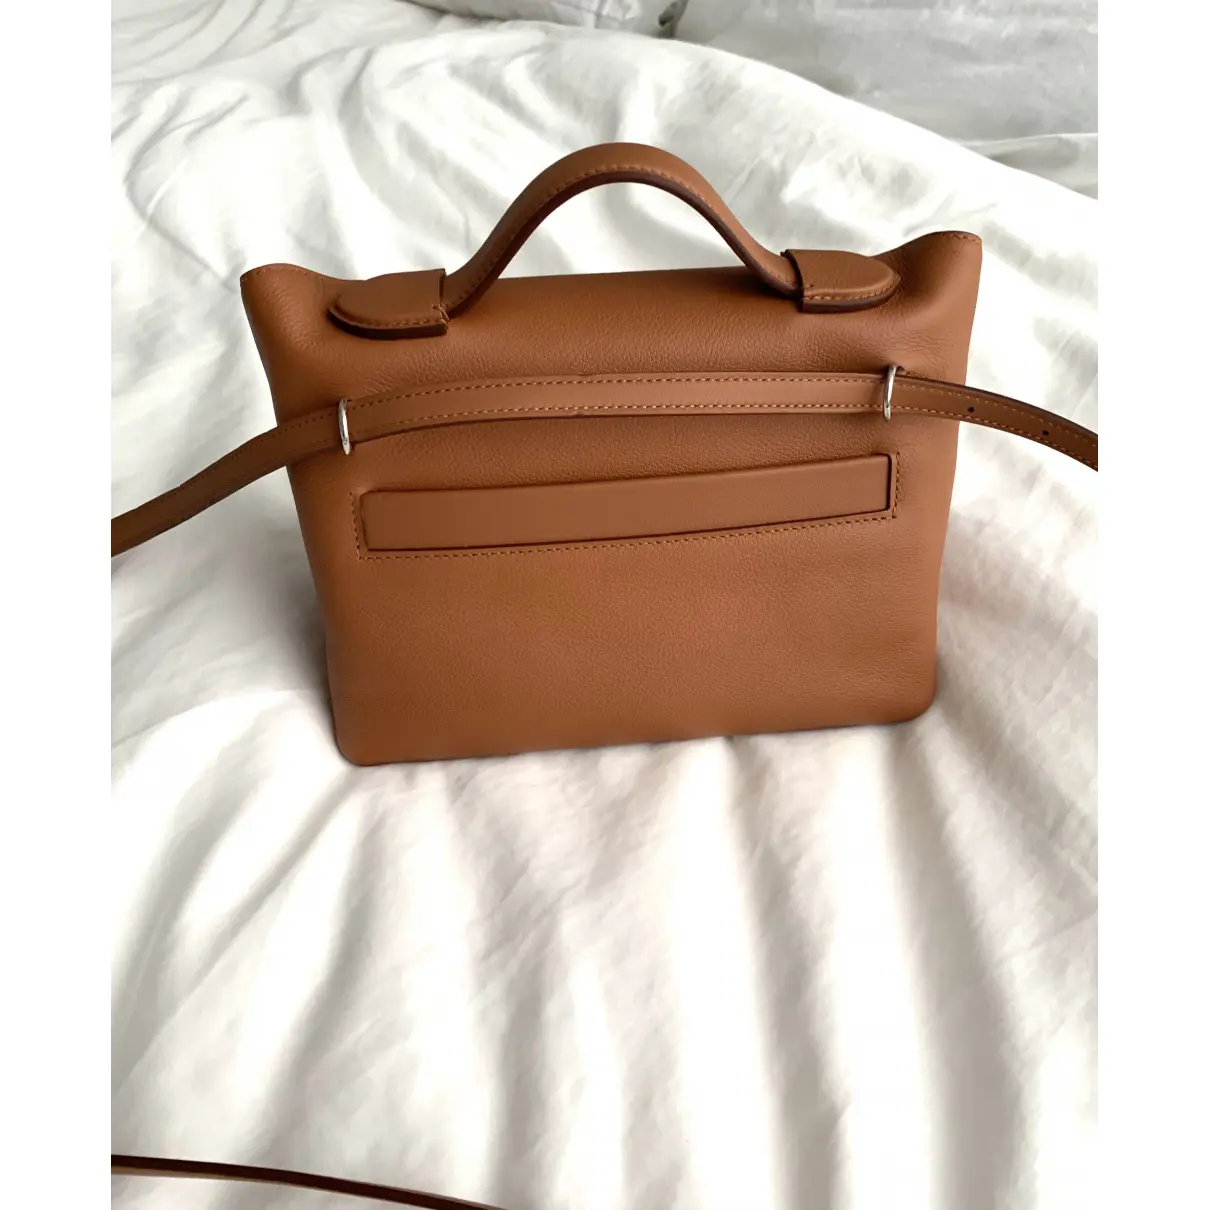 Buy Hermès 24/24 leather handbag online